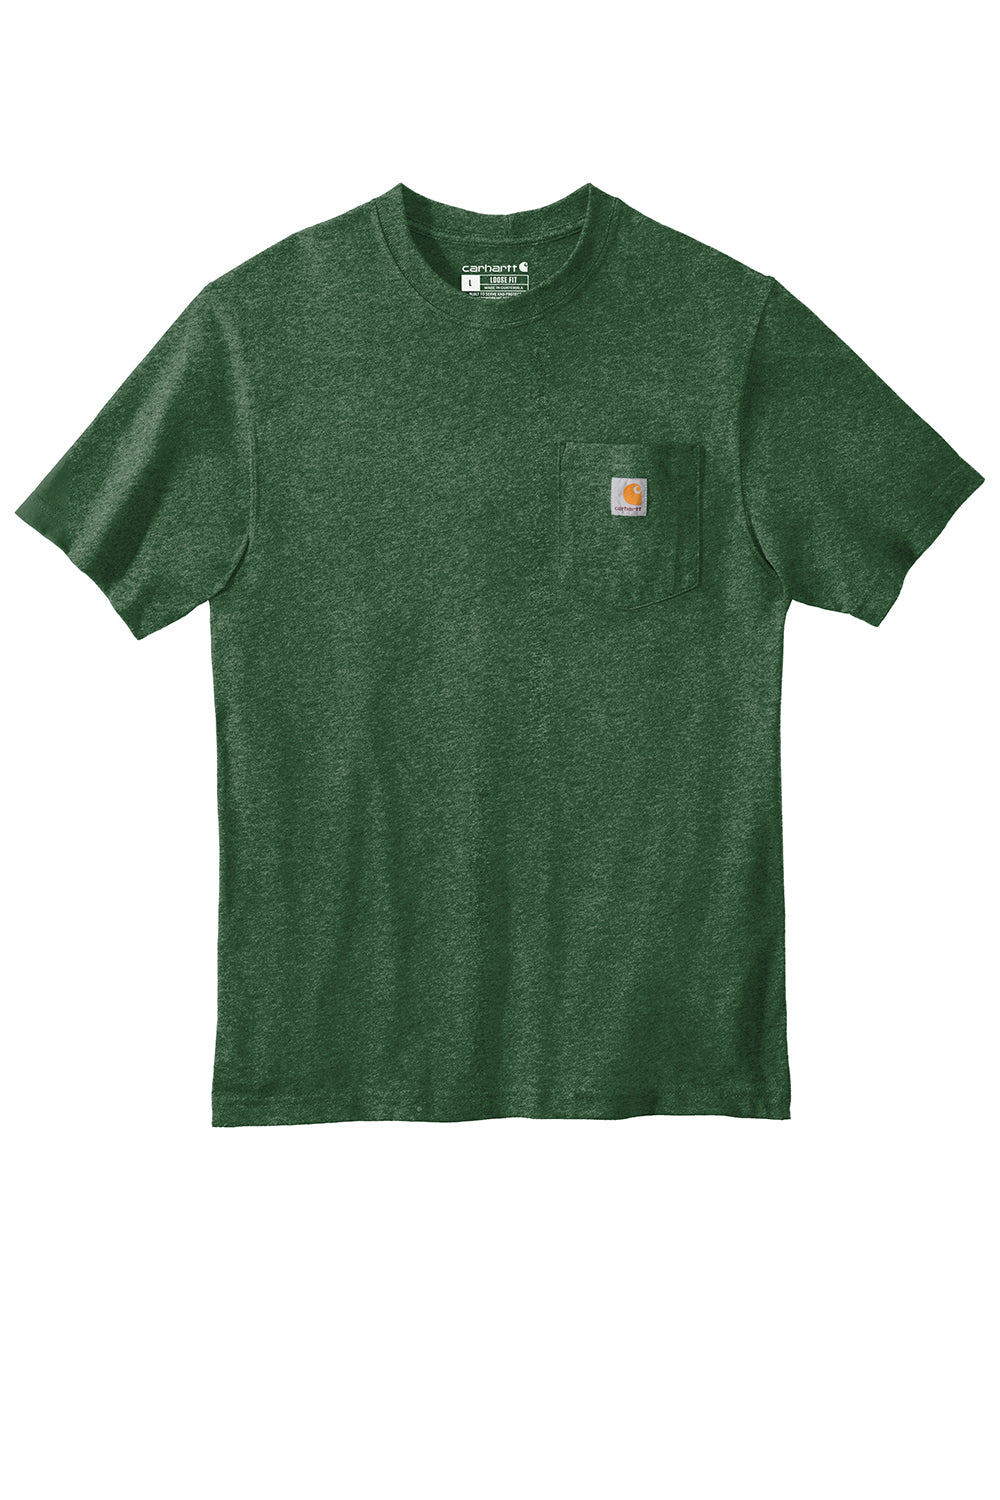 Carhartt CTK87/CTTK87 Mens Workwear Short Sleeve Crewneck T-Shirt w/ Pocket Heather North Woods Green Flat Front